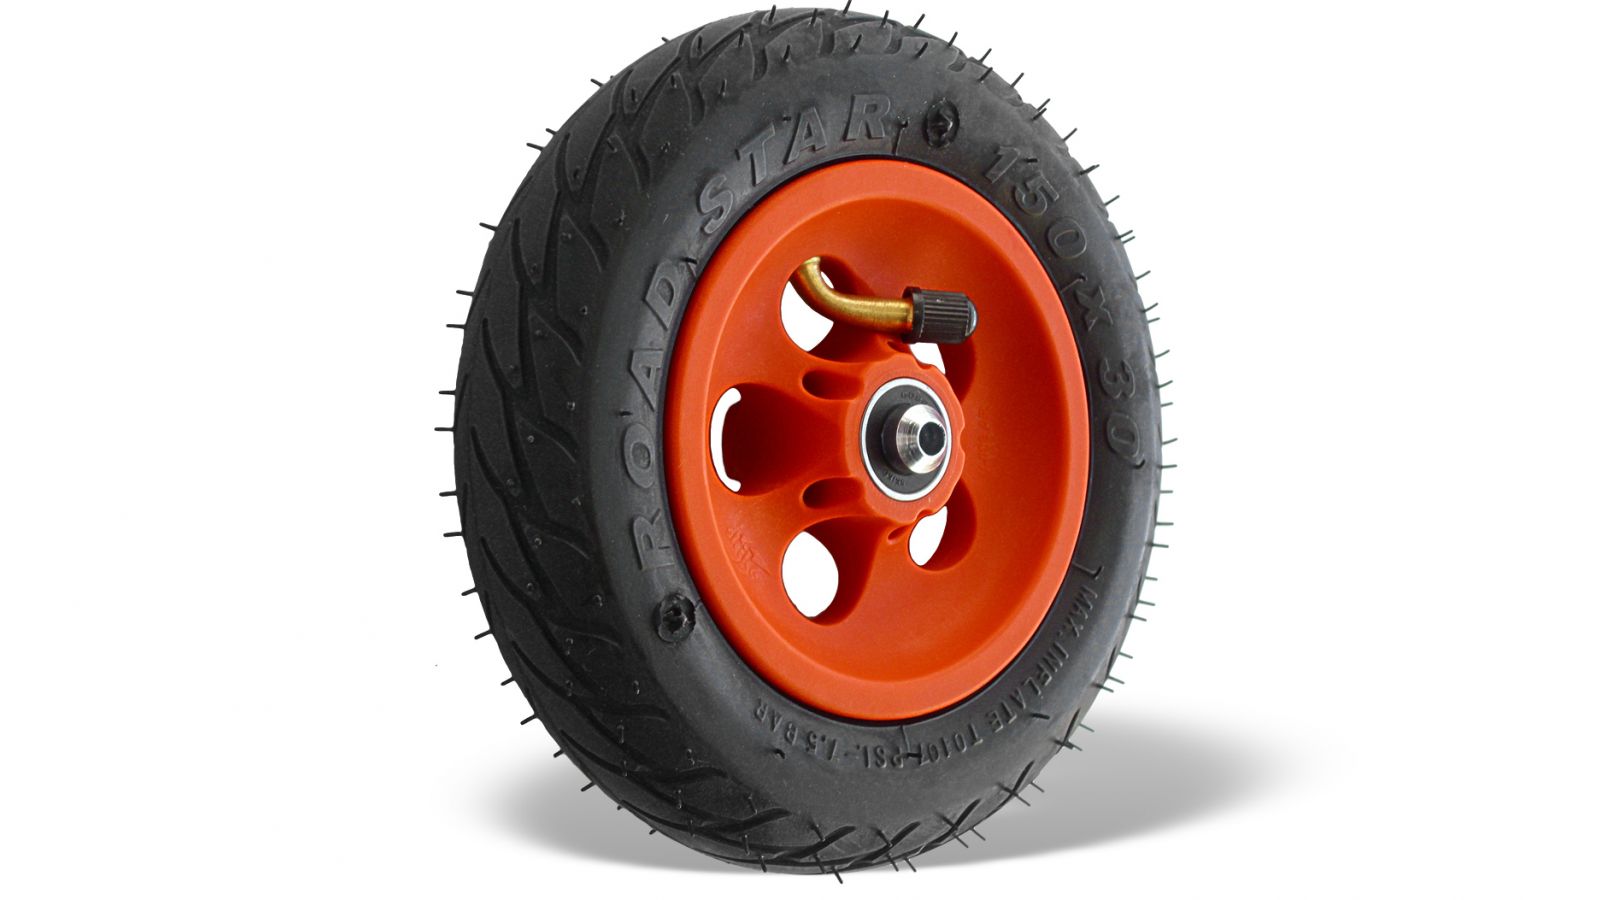 Wheel Orange 150mm/6 inch Orange with Classic Rim